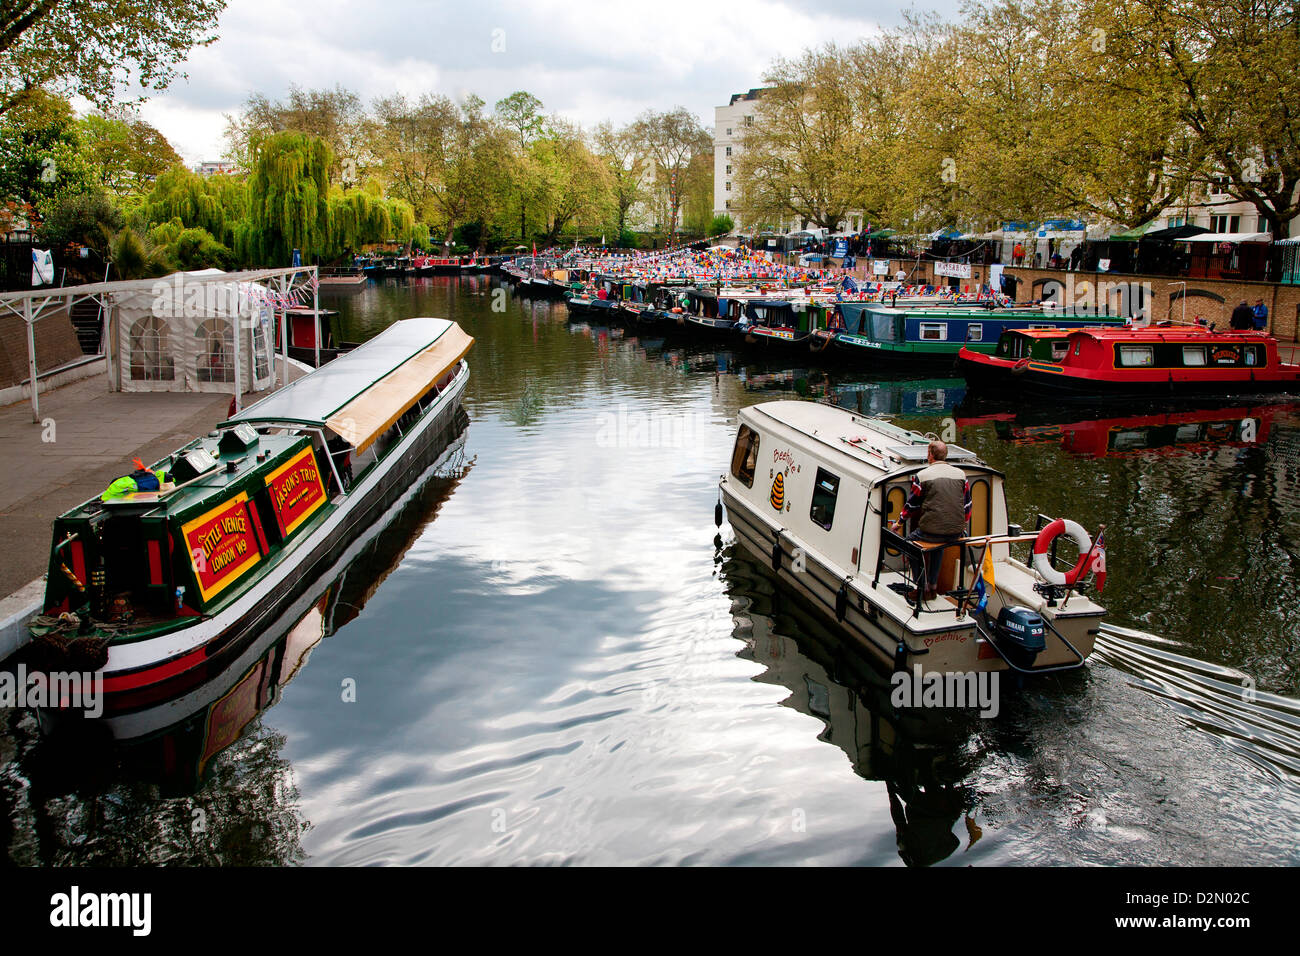 Le Grand Union Canal, Little Venice, Maida Vale, Londres, Angleterre, Royaume-Uni, Europe Banque D'Images